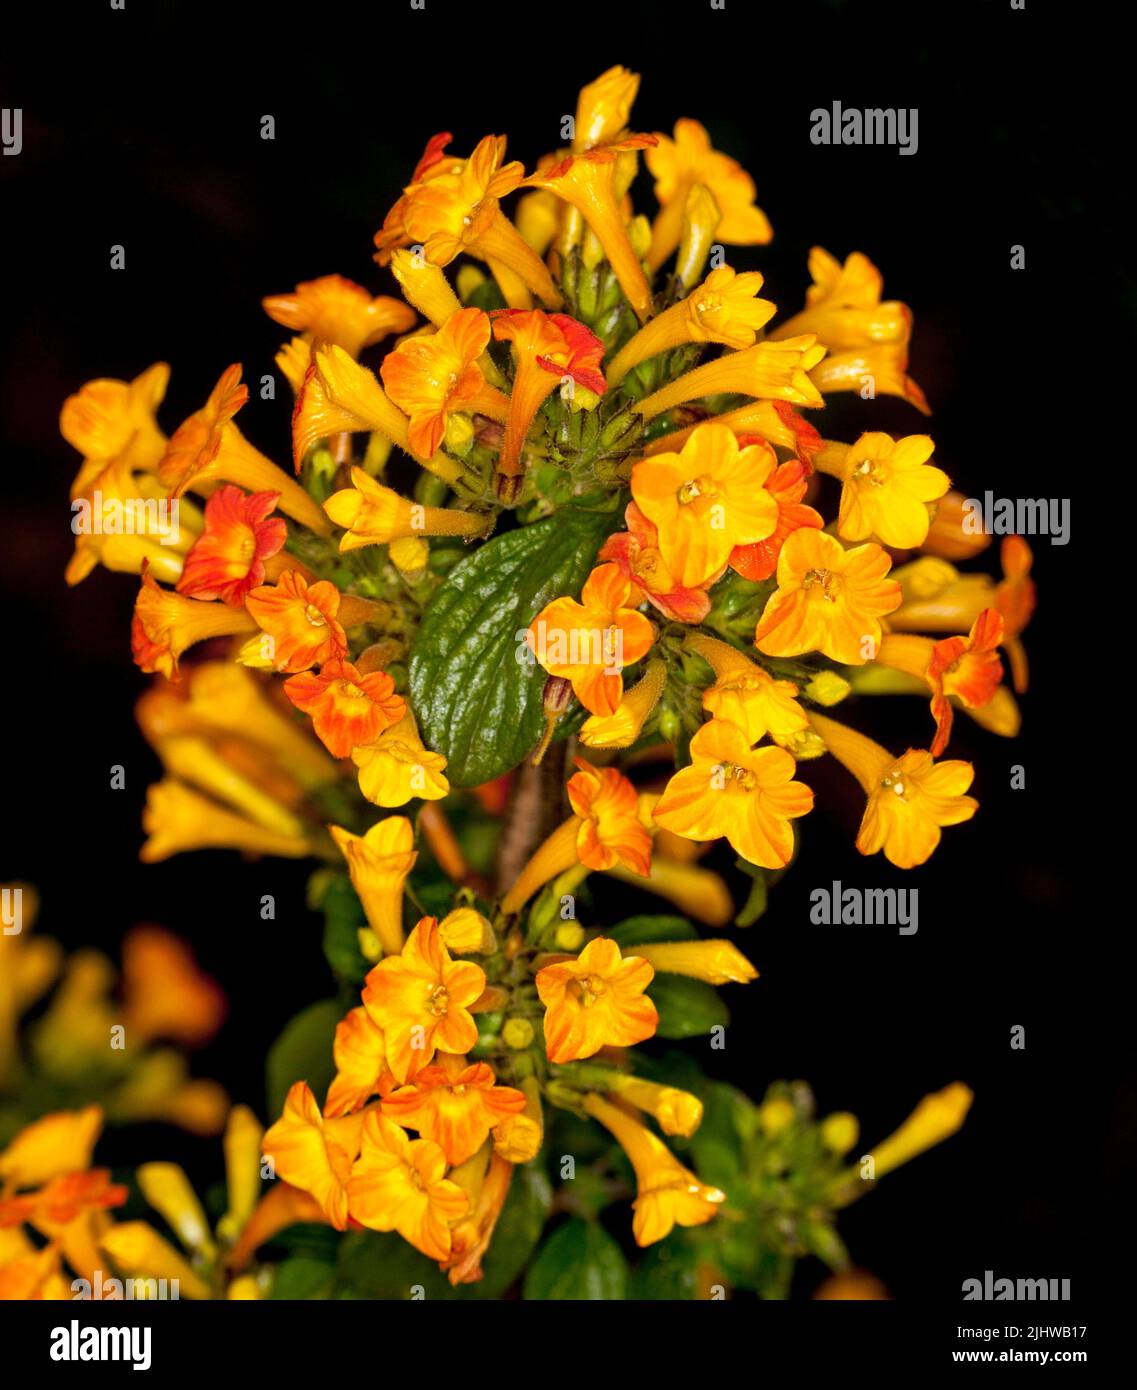 Cluster of vivid orange and yellow flowers of Streptosolen / Browallia jamesonii, Marmalade Bush, against black background, in Australia Stock Photo